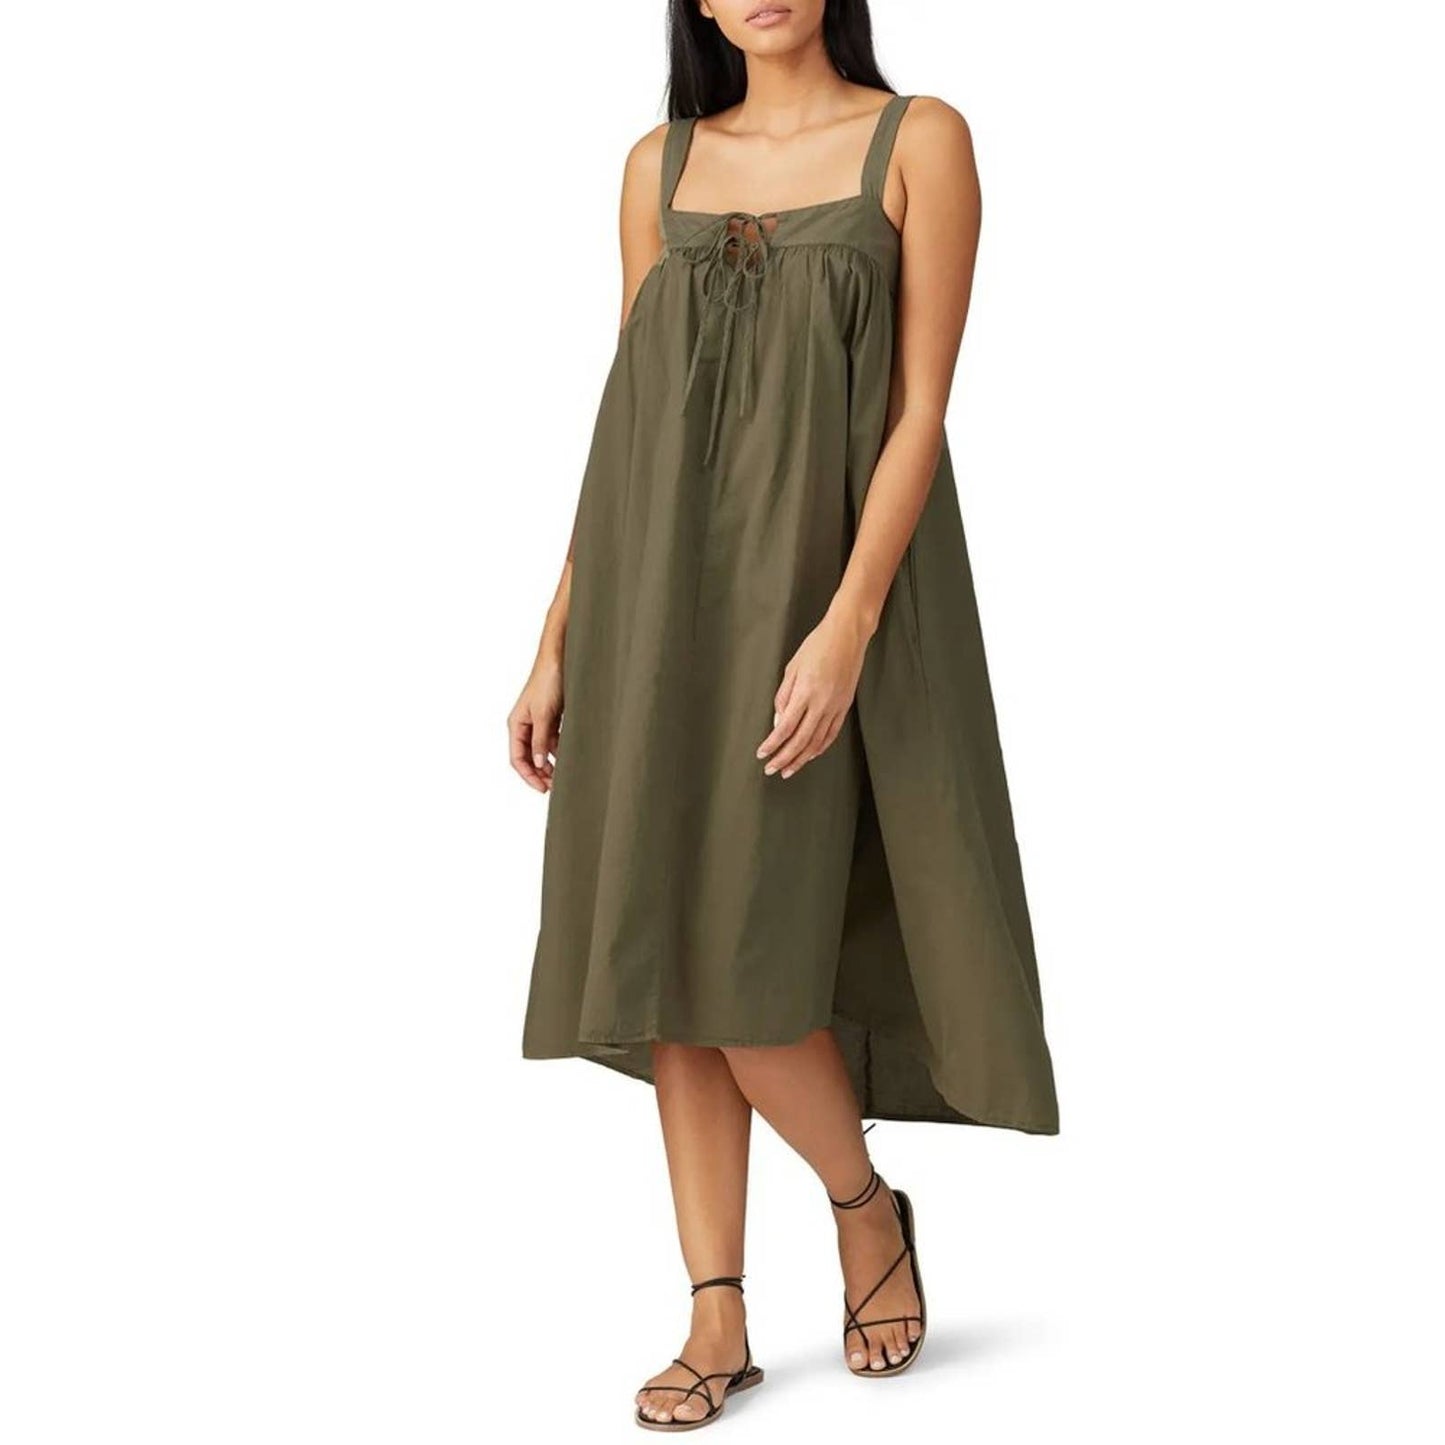 XIRENA Kynsley Dress in Olive Green Size Medium